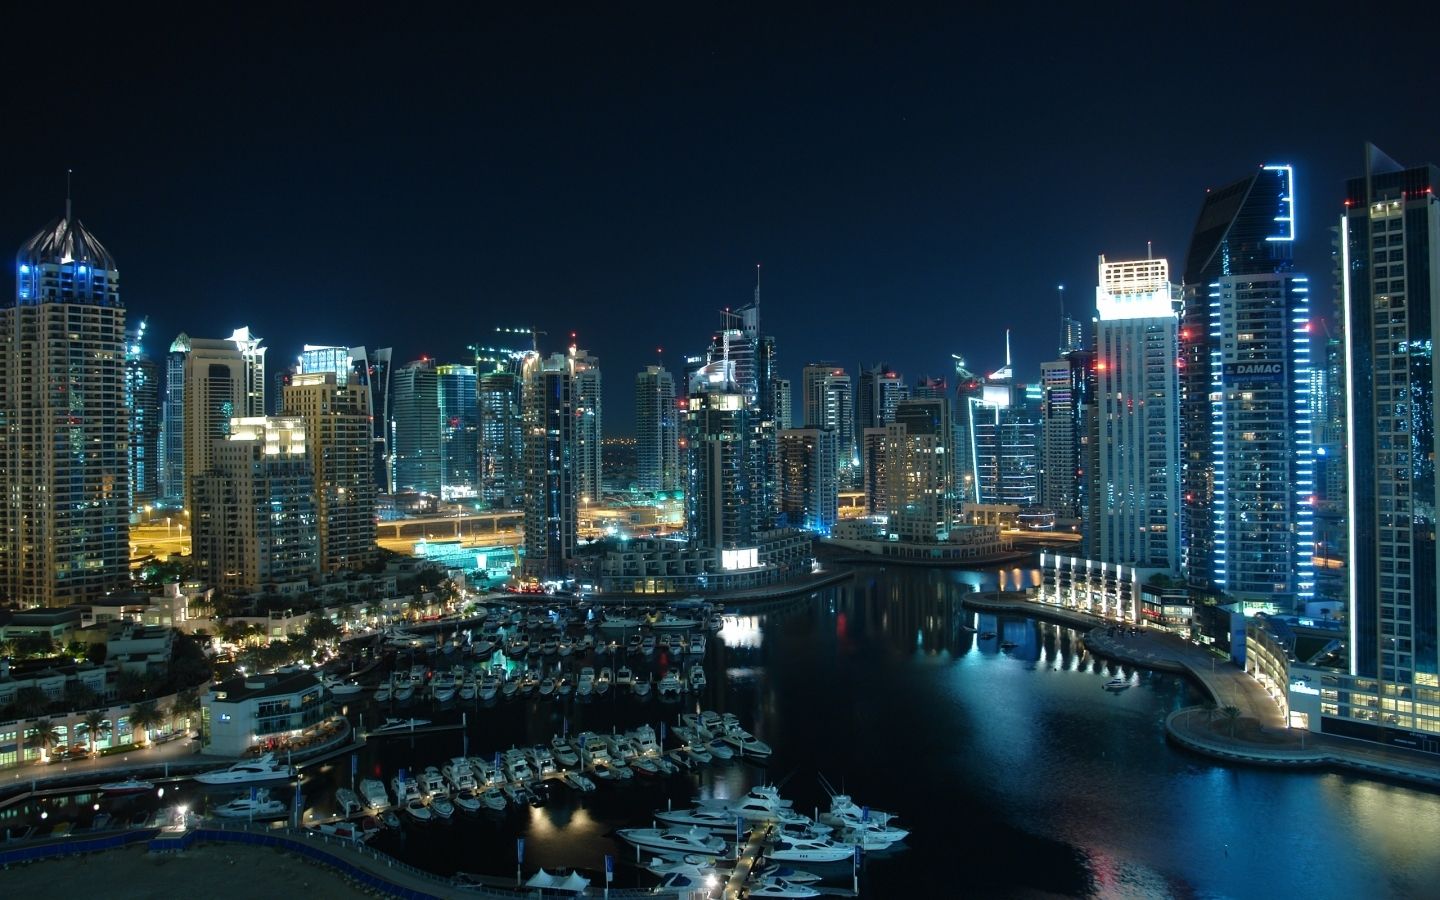 Amazing Dubai Marina Mac Wallpaper Download | Free Mac Wallpapers ...